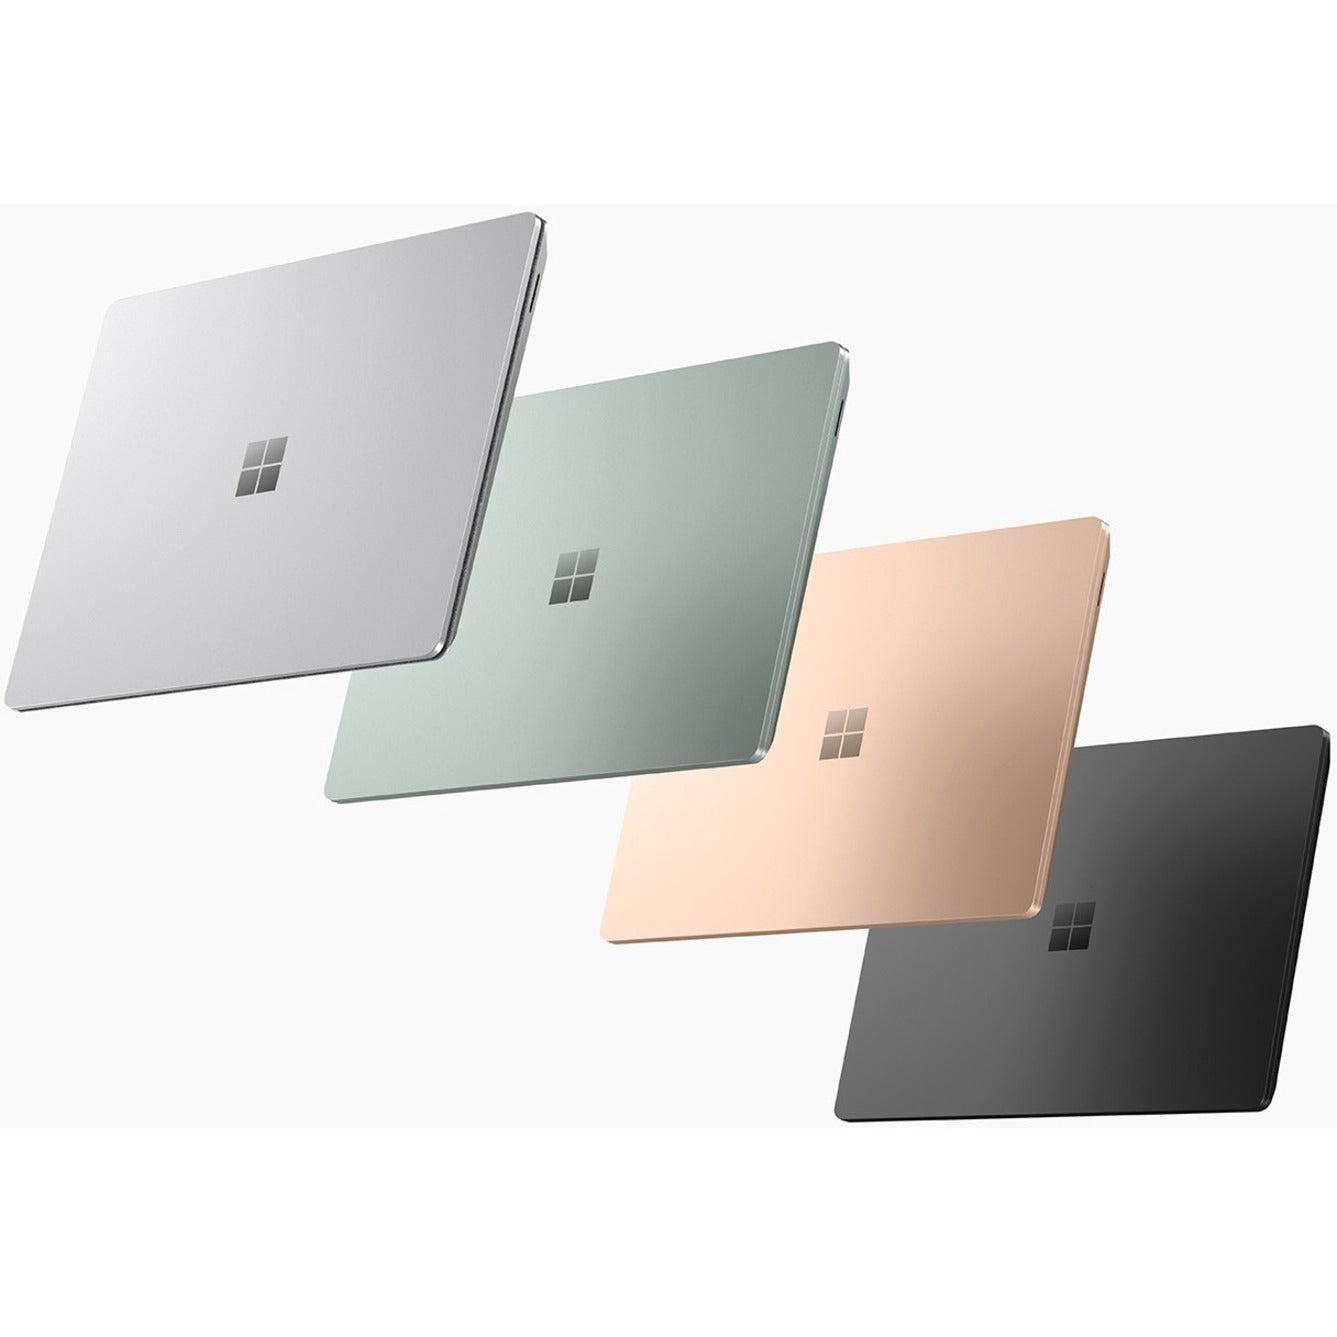 Microsoft RBI-00001 Surface Laptop 5 Notebook, 13.5" Touchscreen, Core i7, 16GB RAM, 512GB SSD, Windows 10 Pro